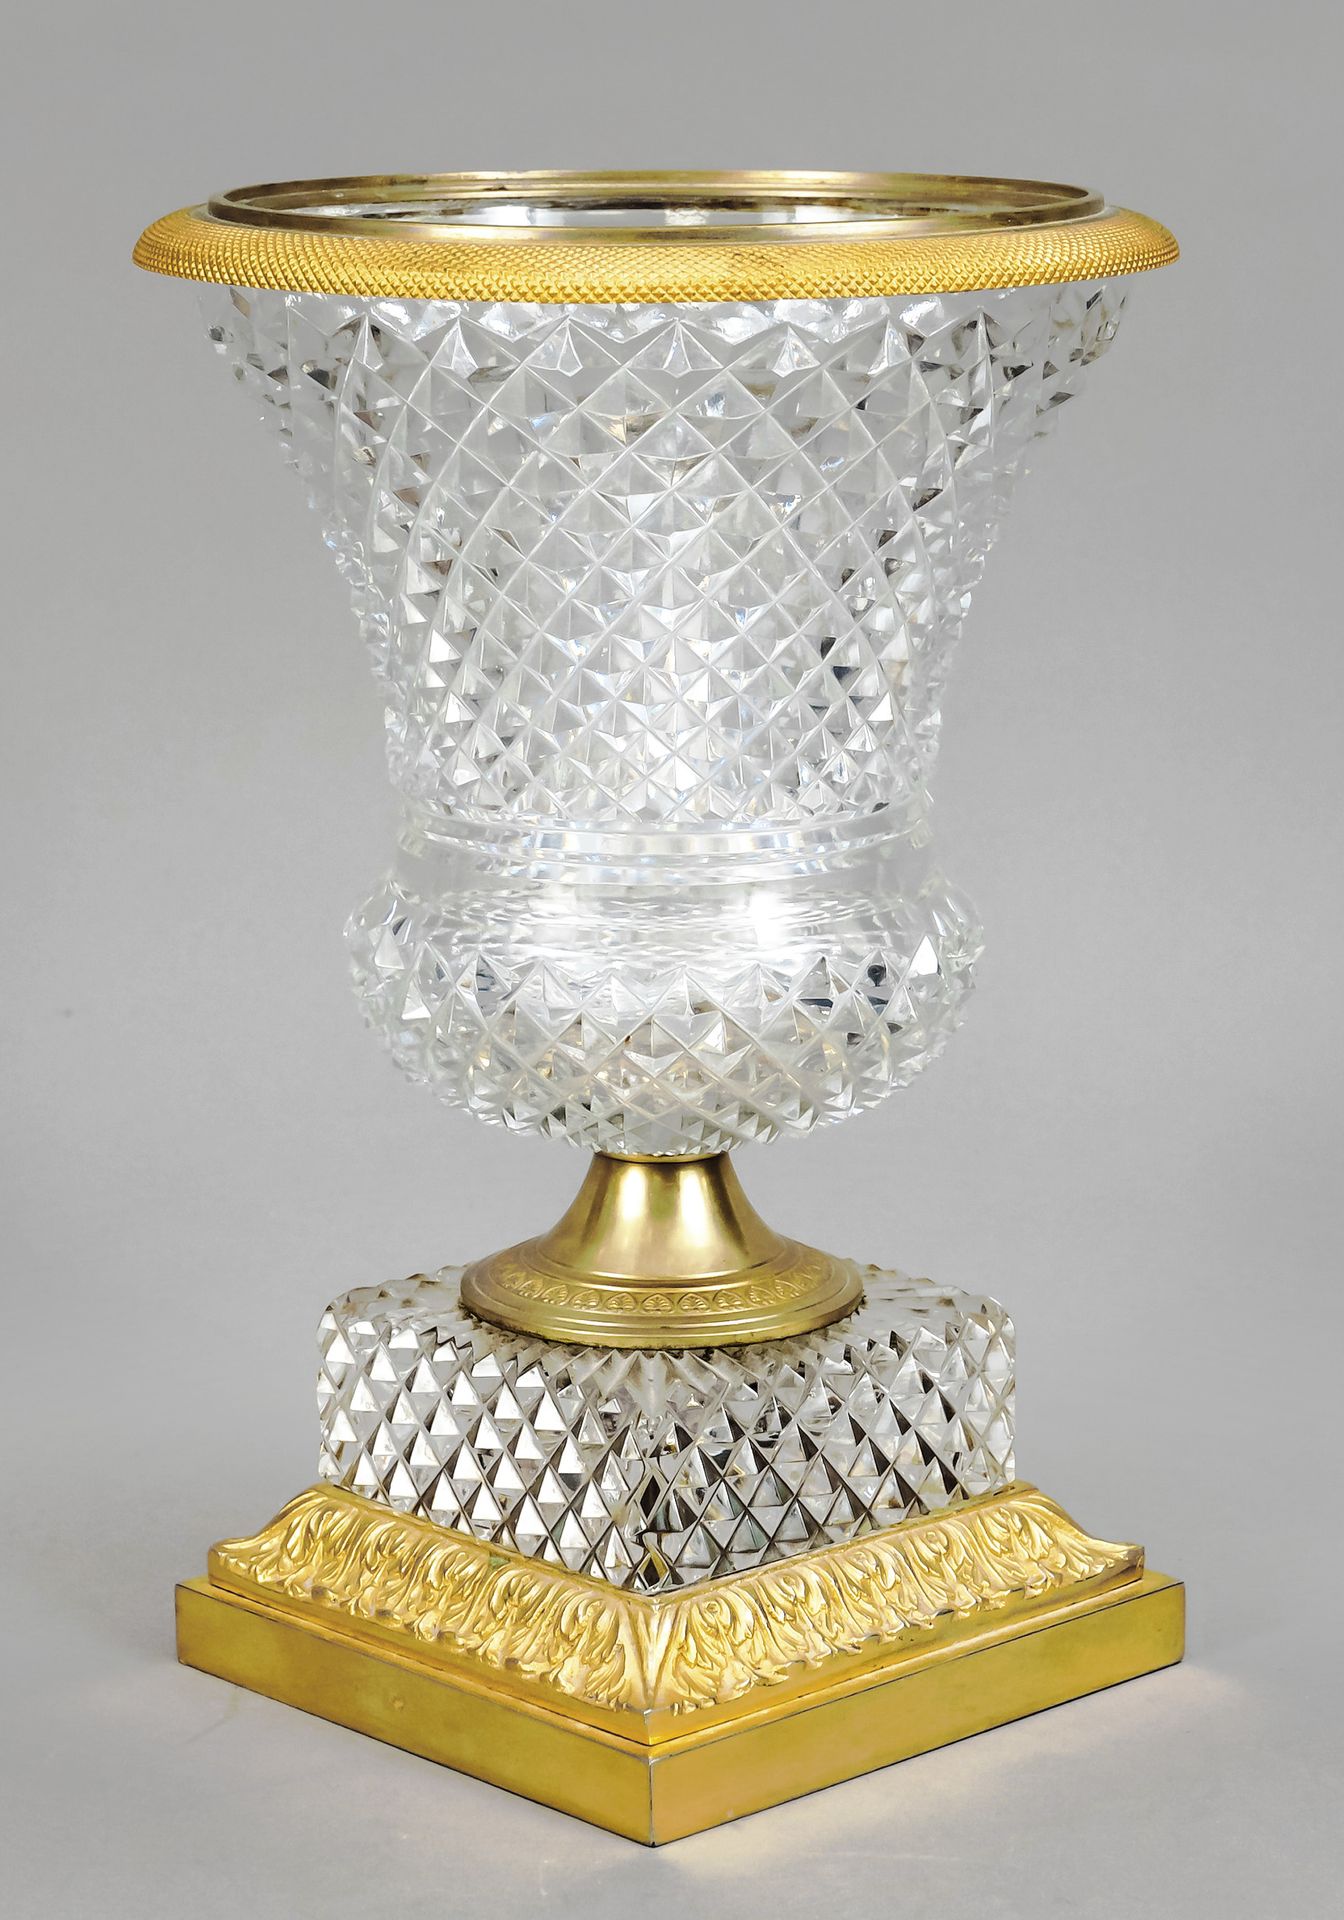 Null 火山口花瓶与镀金青铜安装，可能是法国，约1900年，在一个阶梯式的方形底座上，花瓶与圆形支架，瓶身下部隆起，向口部扩张，瓶身透明玻璃，壁上有蜂窝状结构&hellip;